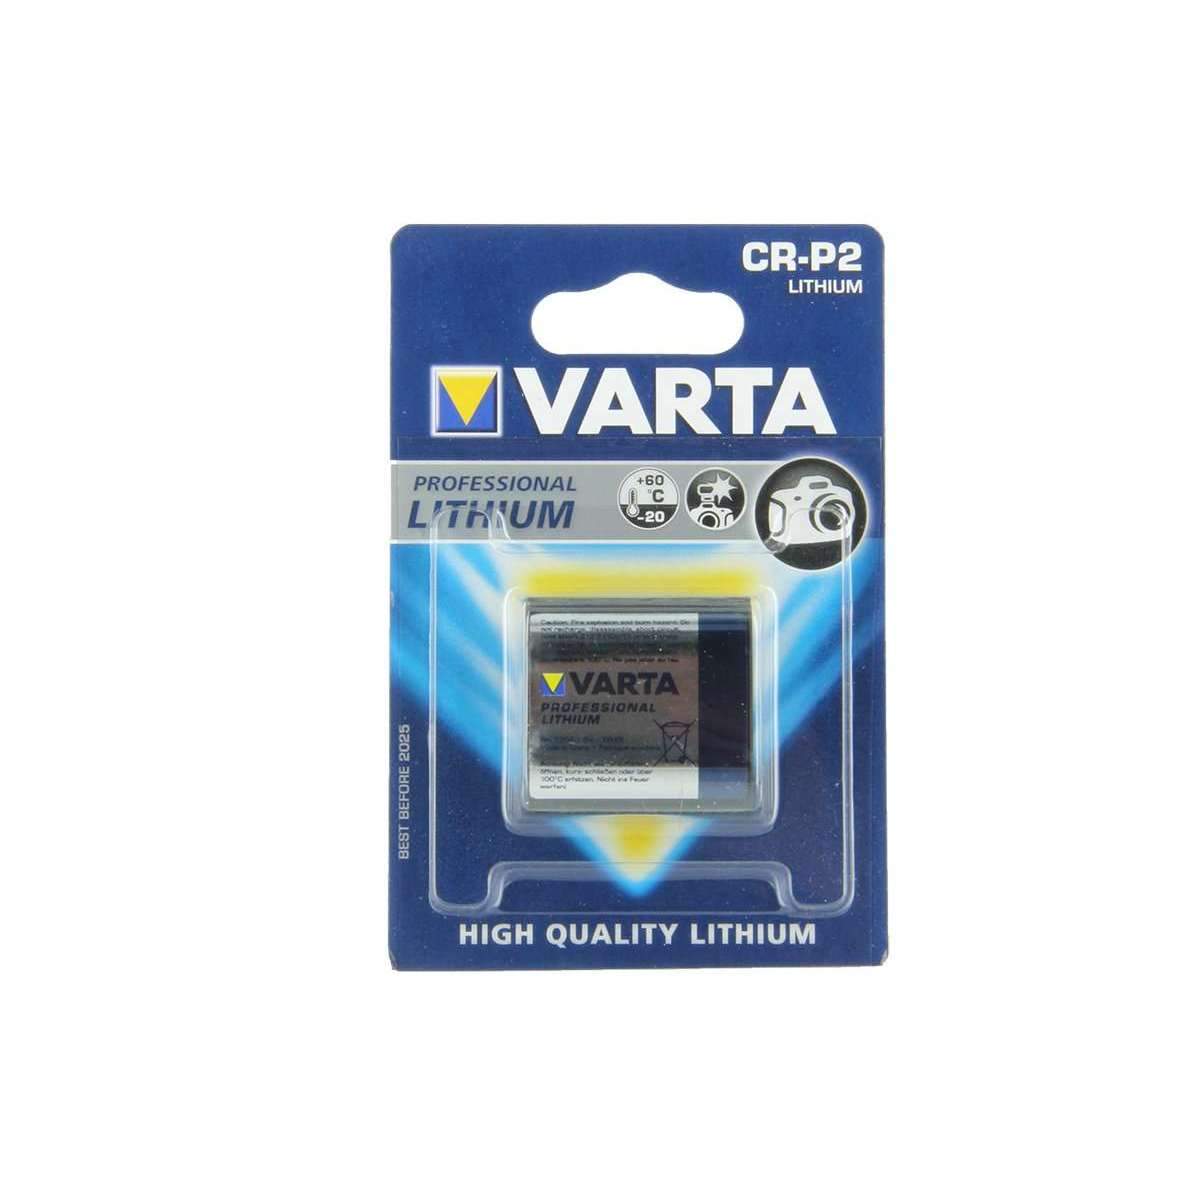 Varta Professional Lithium CR-P2 Battery Varta Disposable Batteries